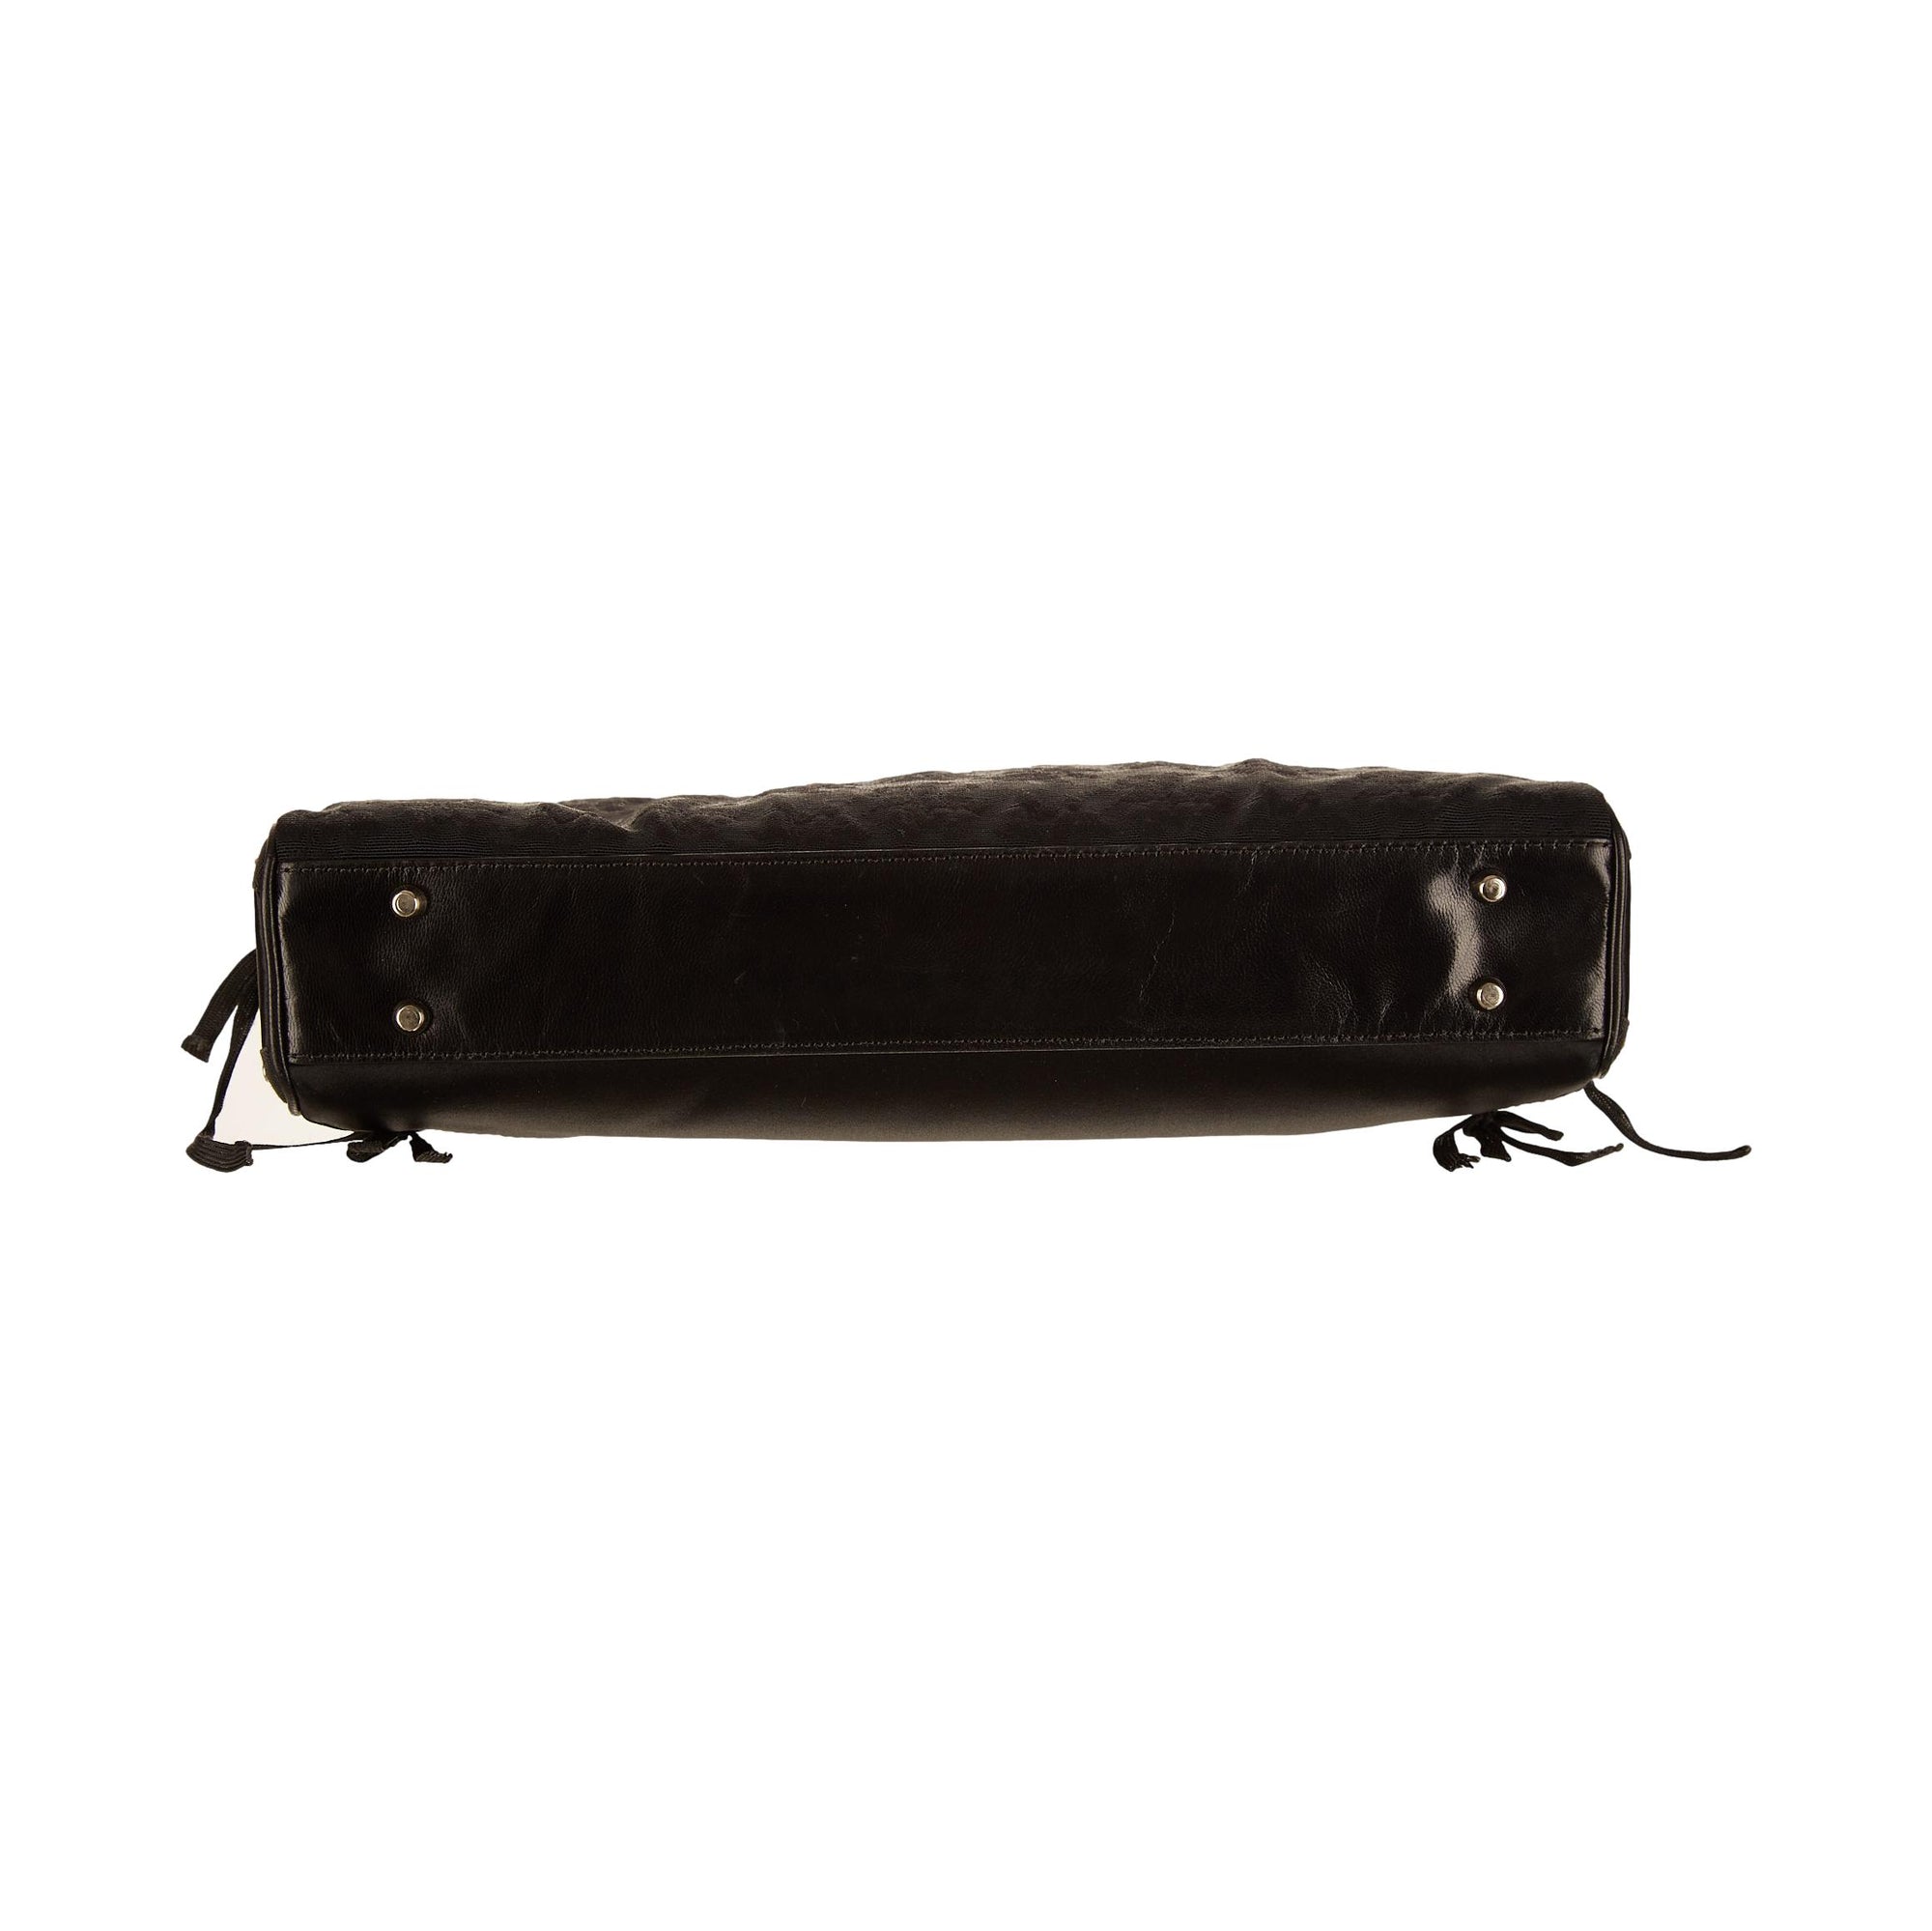 Galliano Black Lace Shoulder Bag